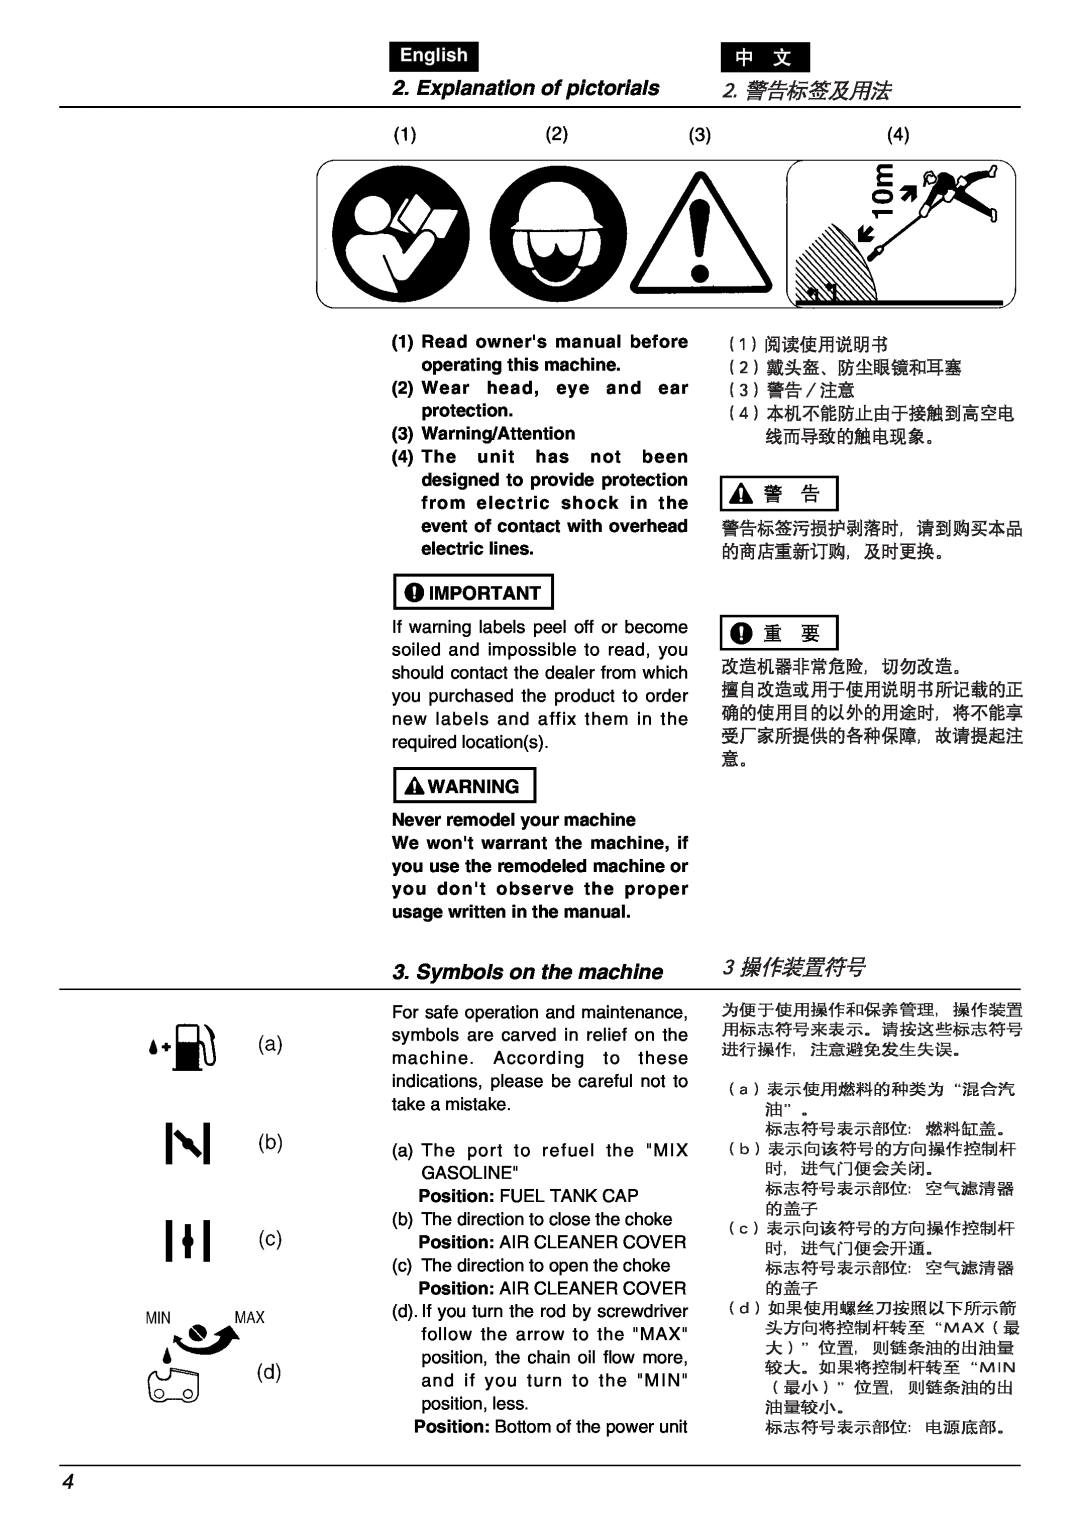 Zenoah PSJ2300 Explanation of pictorials, 2. 警告标签及用法, Symbols on the machine 3 操作装置符号, Never remodel your machine, English 